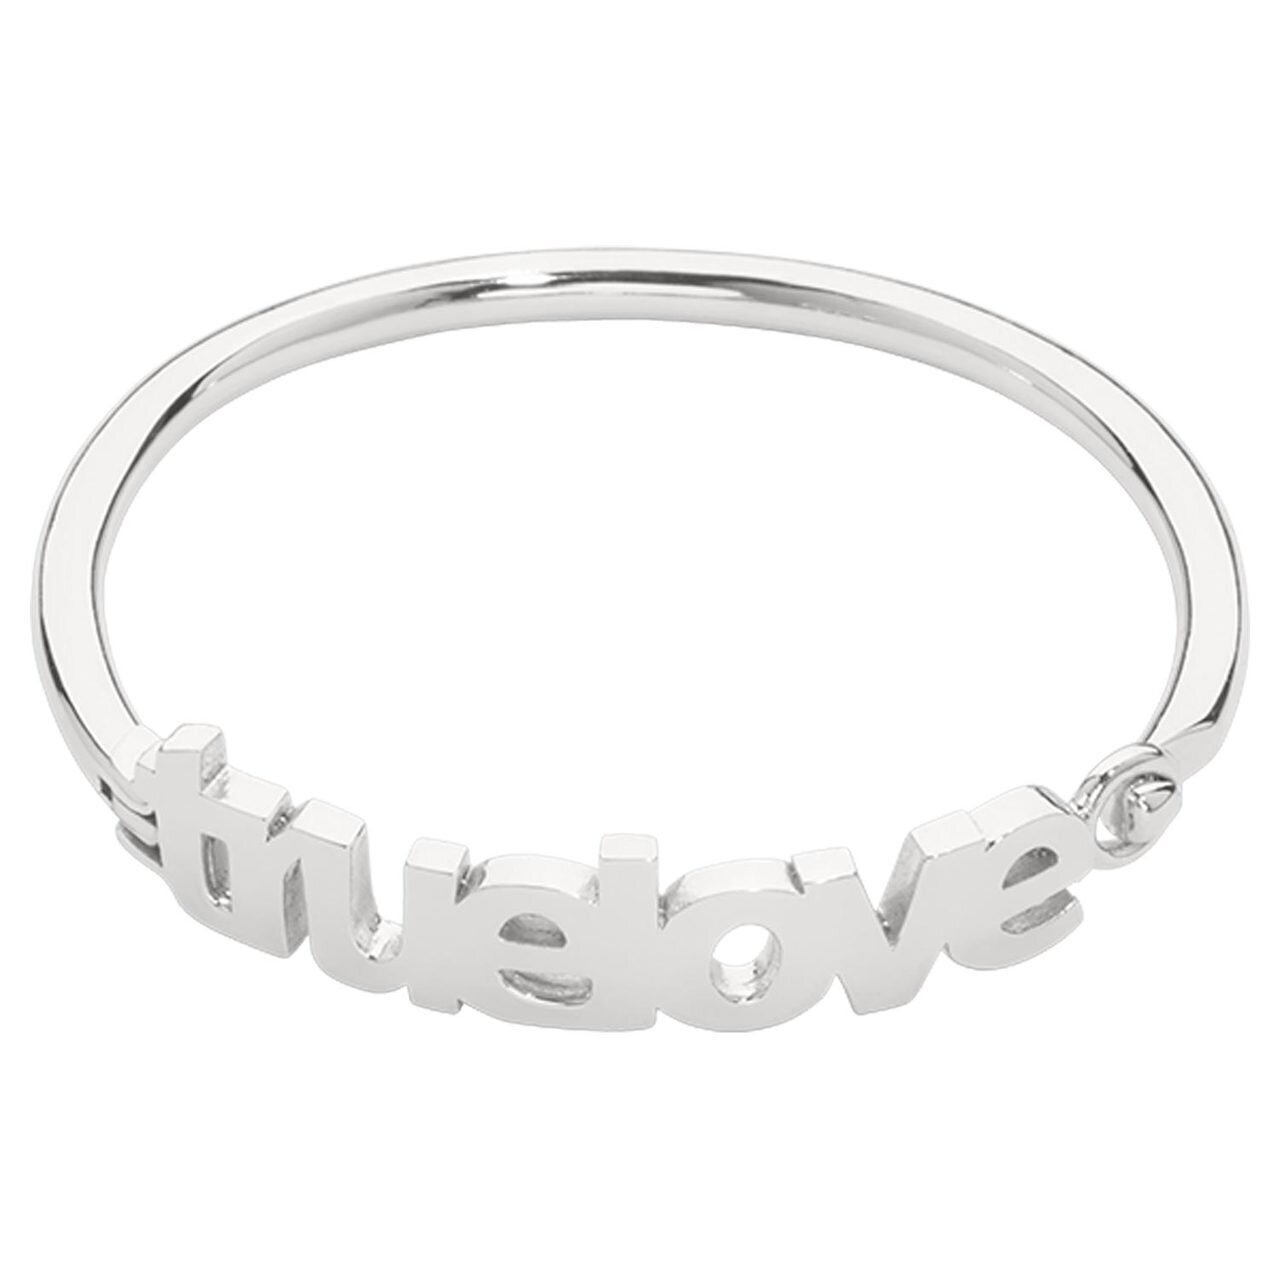 Nikki Lissoni Bracelet with True Love Tag Silver-plated 21cm B1134S21